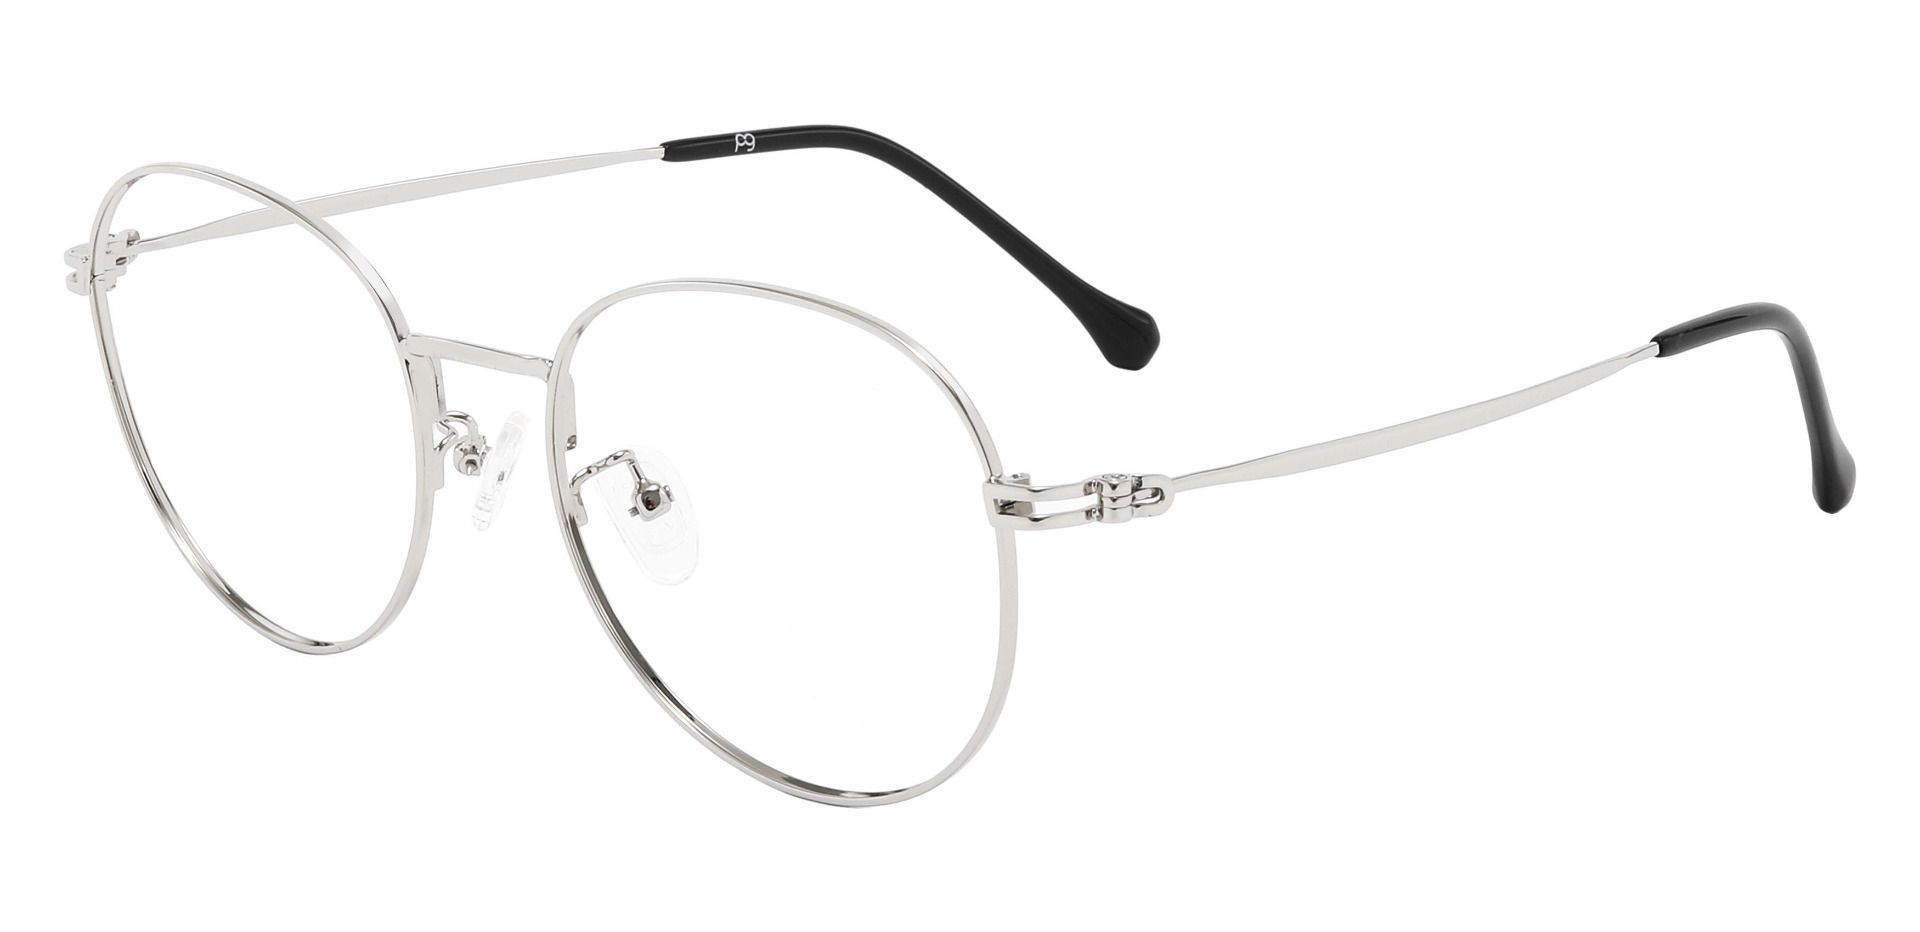 Bismarck Oval Blue Light Blocking Glasses - Silver | Women's Eyeglasses ...